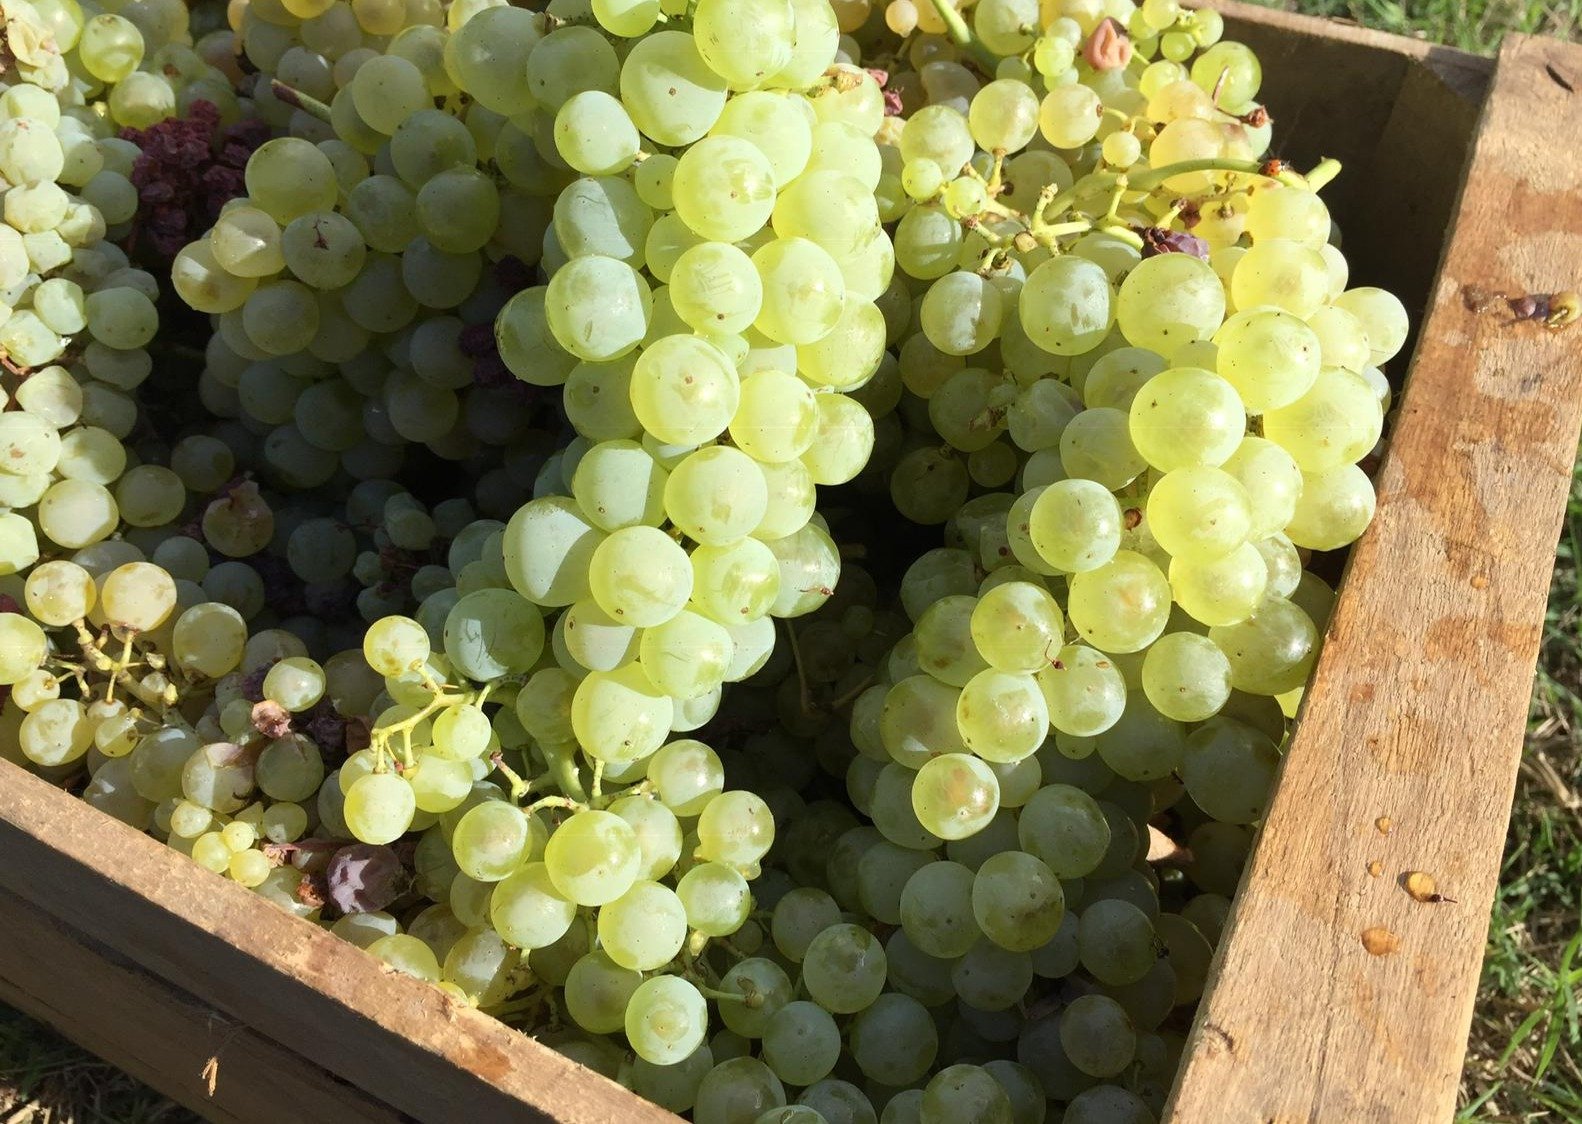 Grapes grown in Reggio Emilia for balsamic vinegar